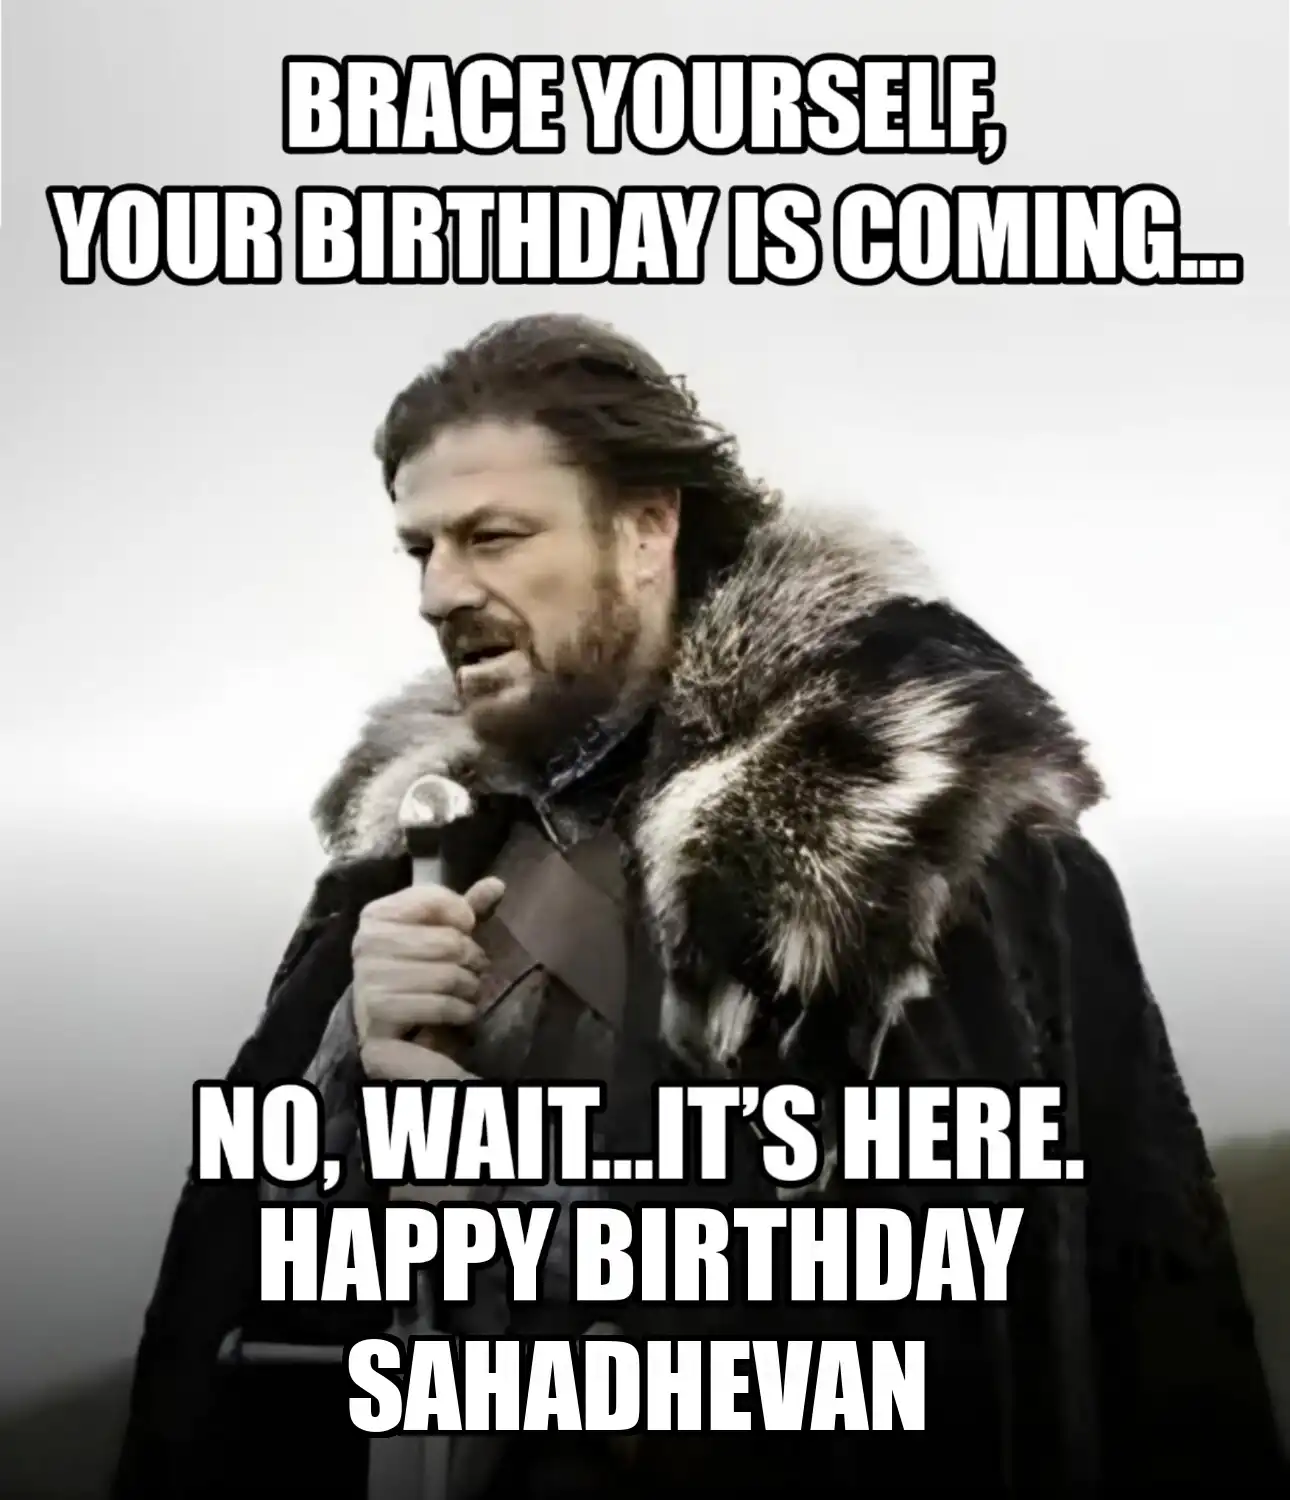 Happy Birthday Sahadhevan Brace Yourself Your Birthday Is Coming Meme